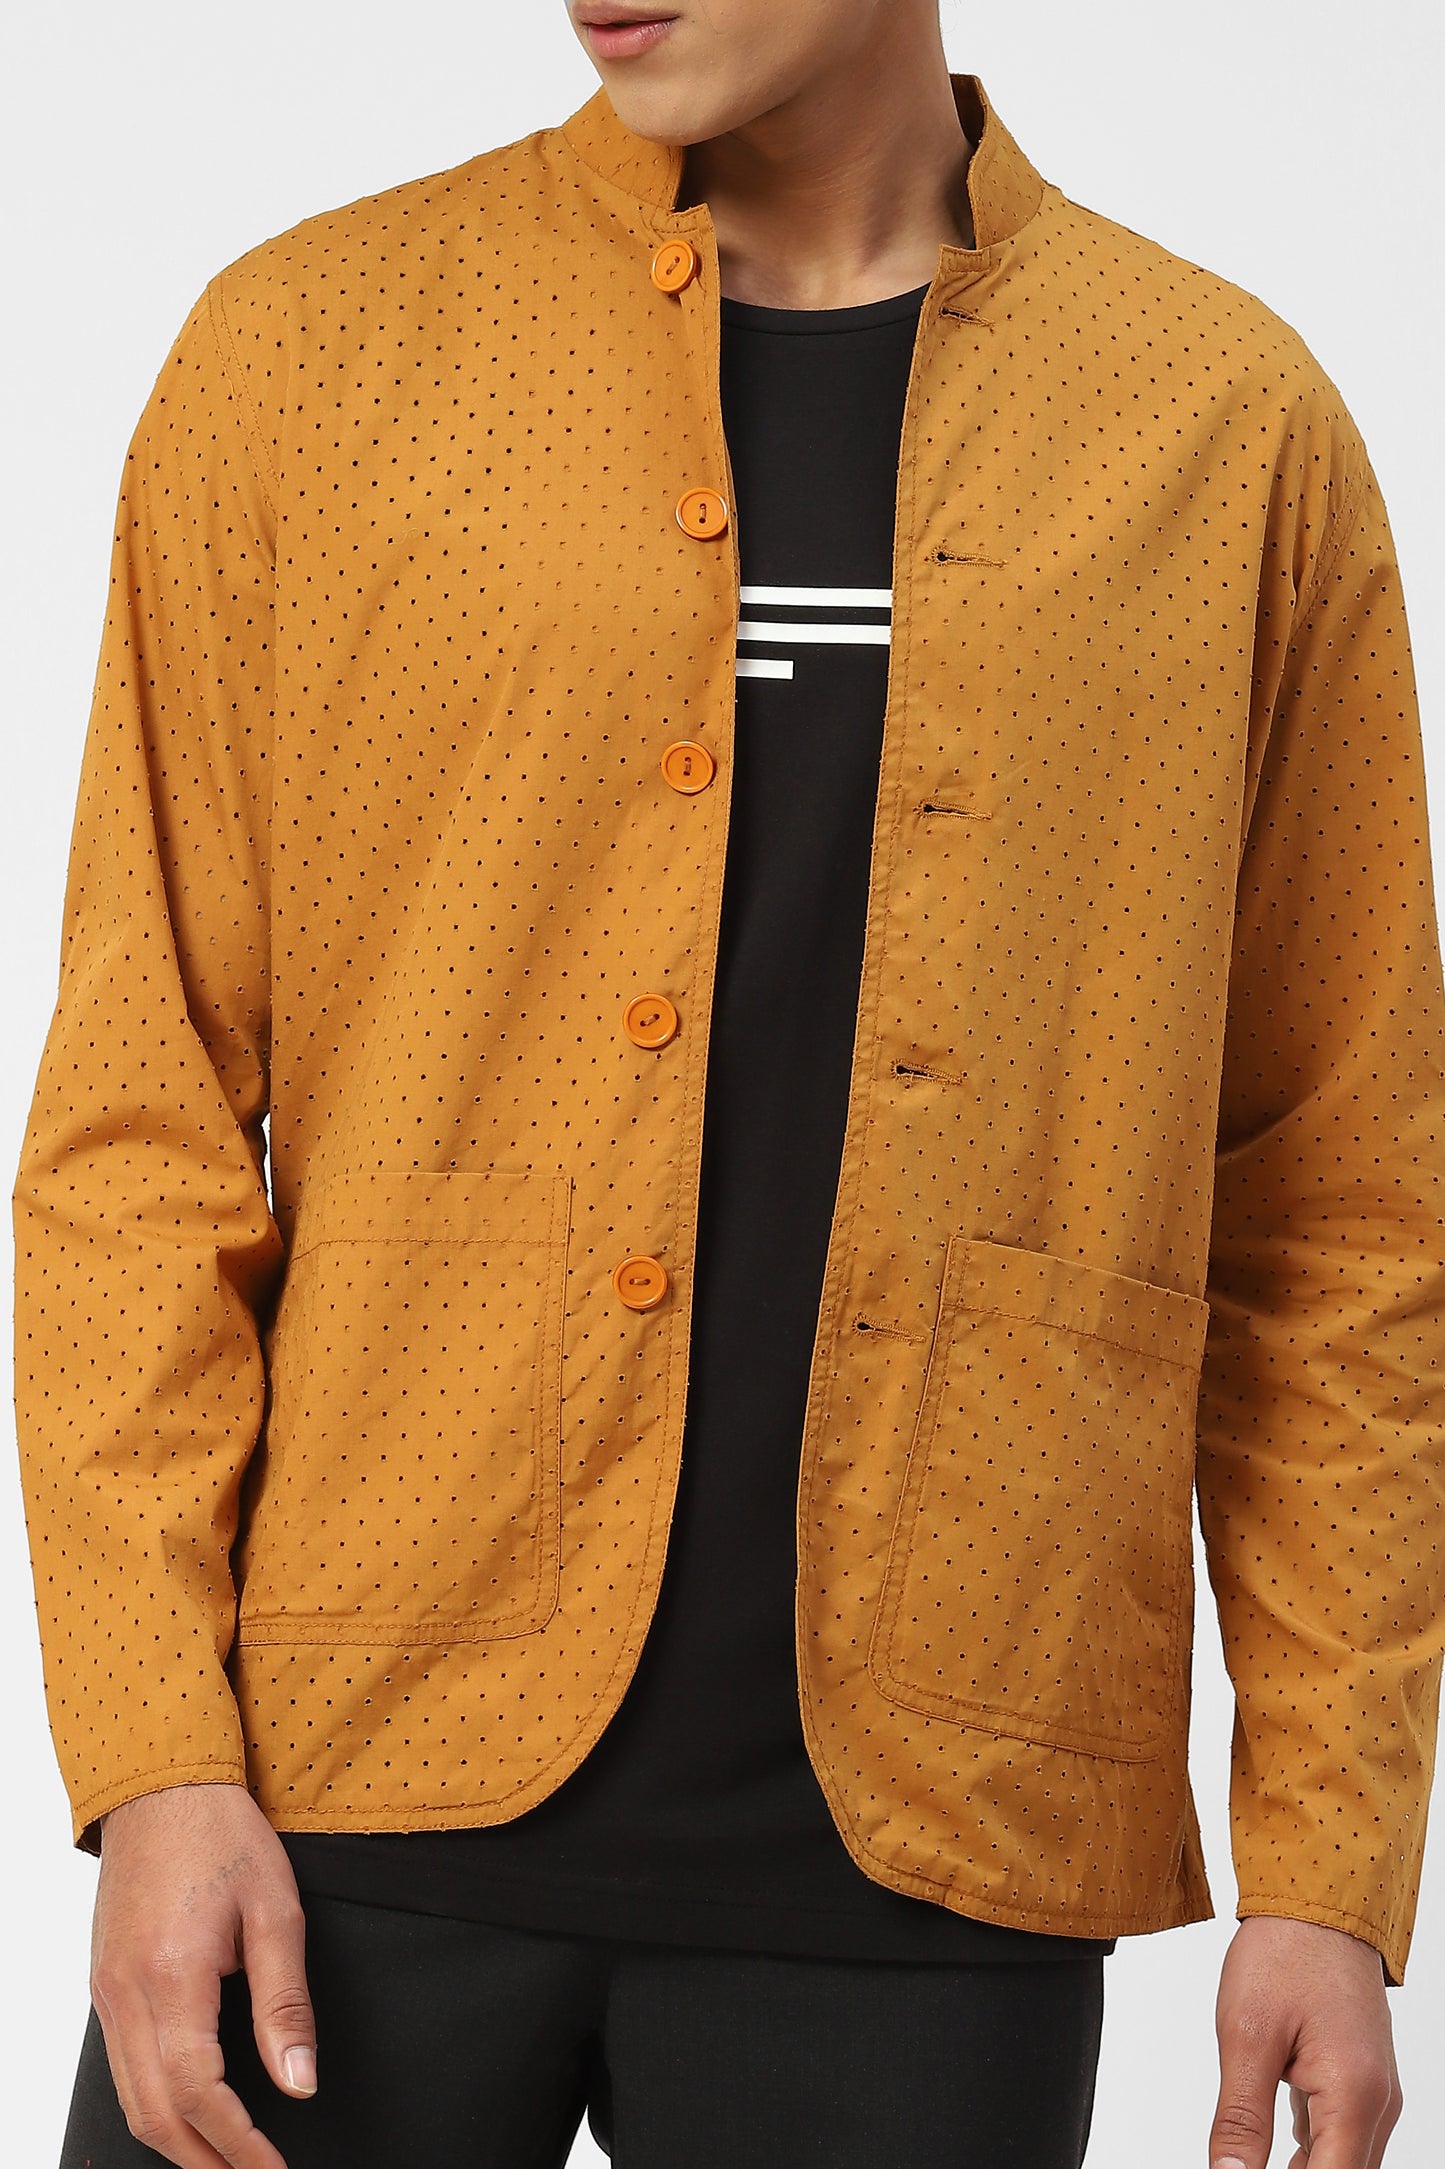 Perforated Mens Blazer Jacket with Mandarin Collar